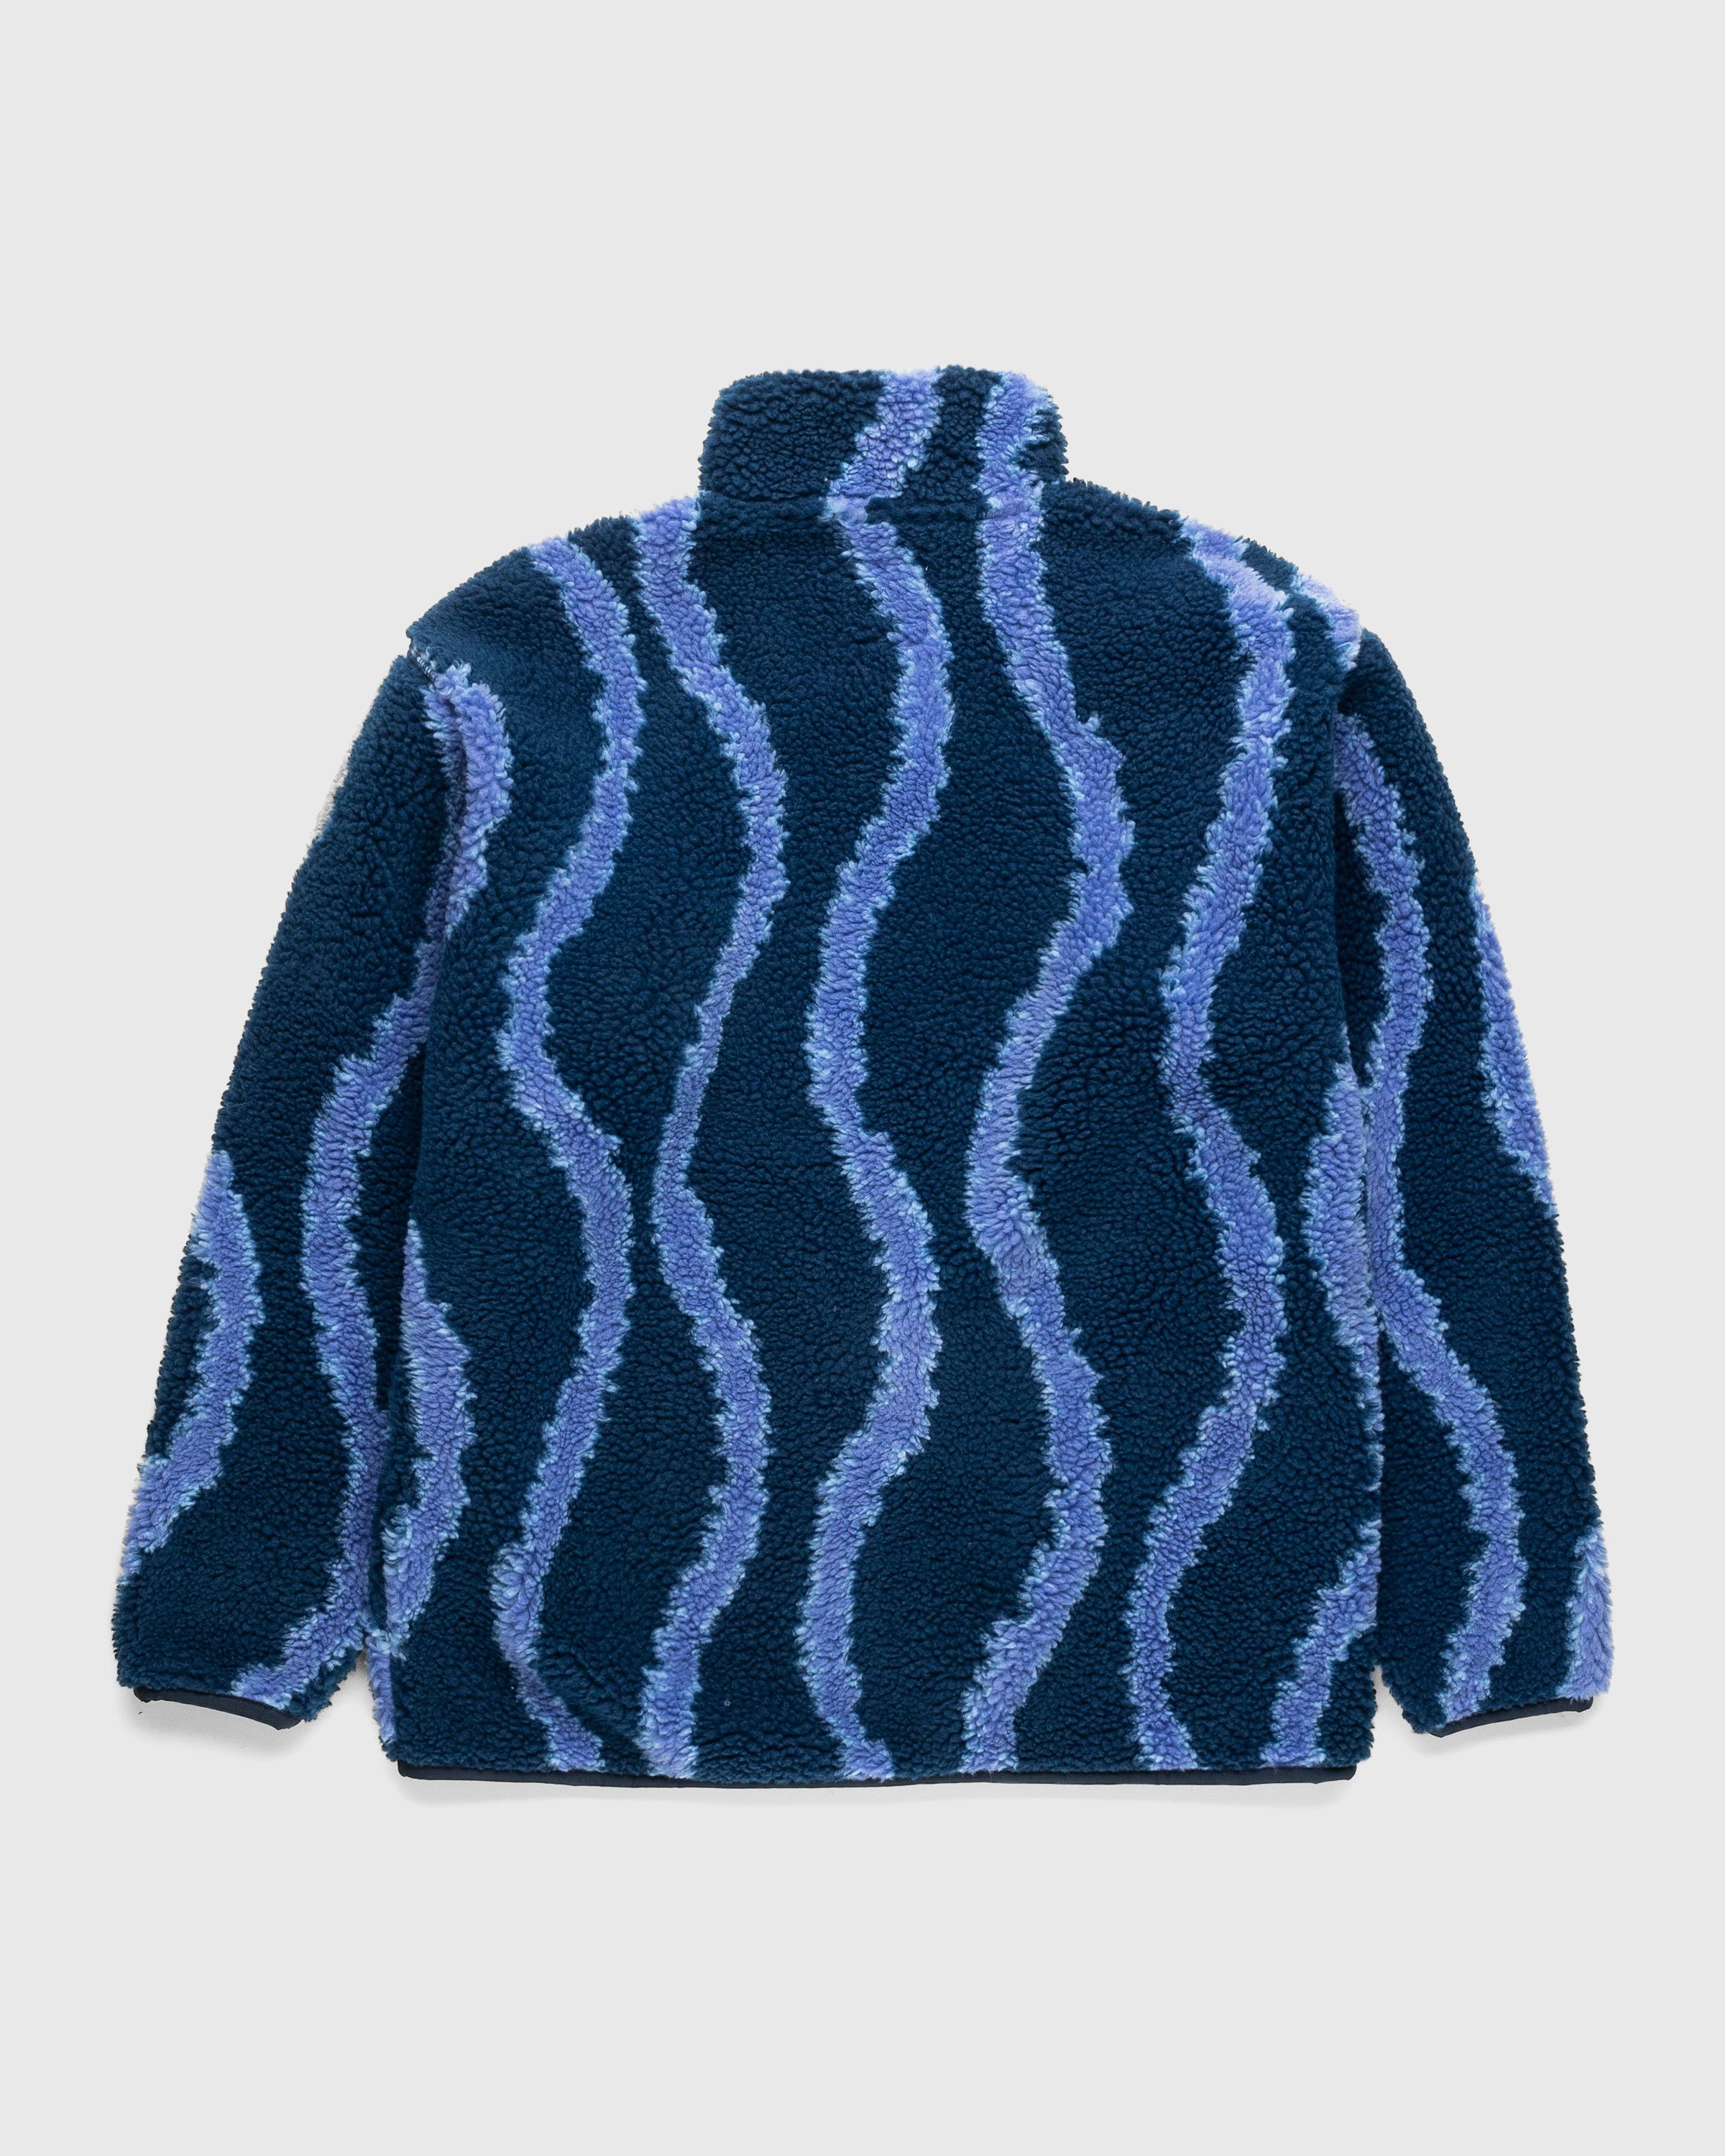 Gramicci - Sherpa Jacket Navy Swirl - Clothing - Blue - Image 2